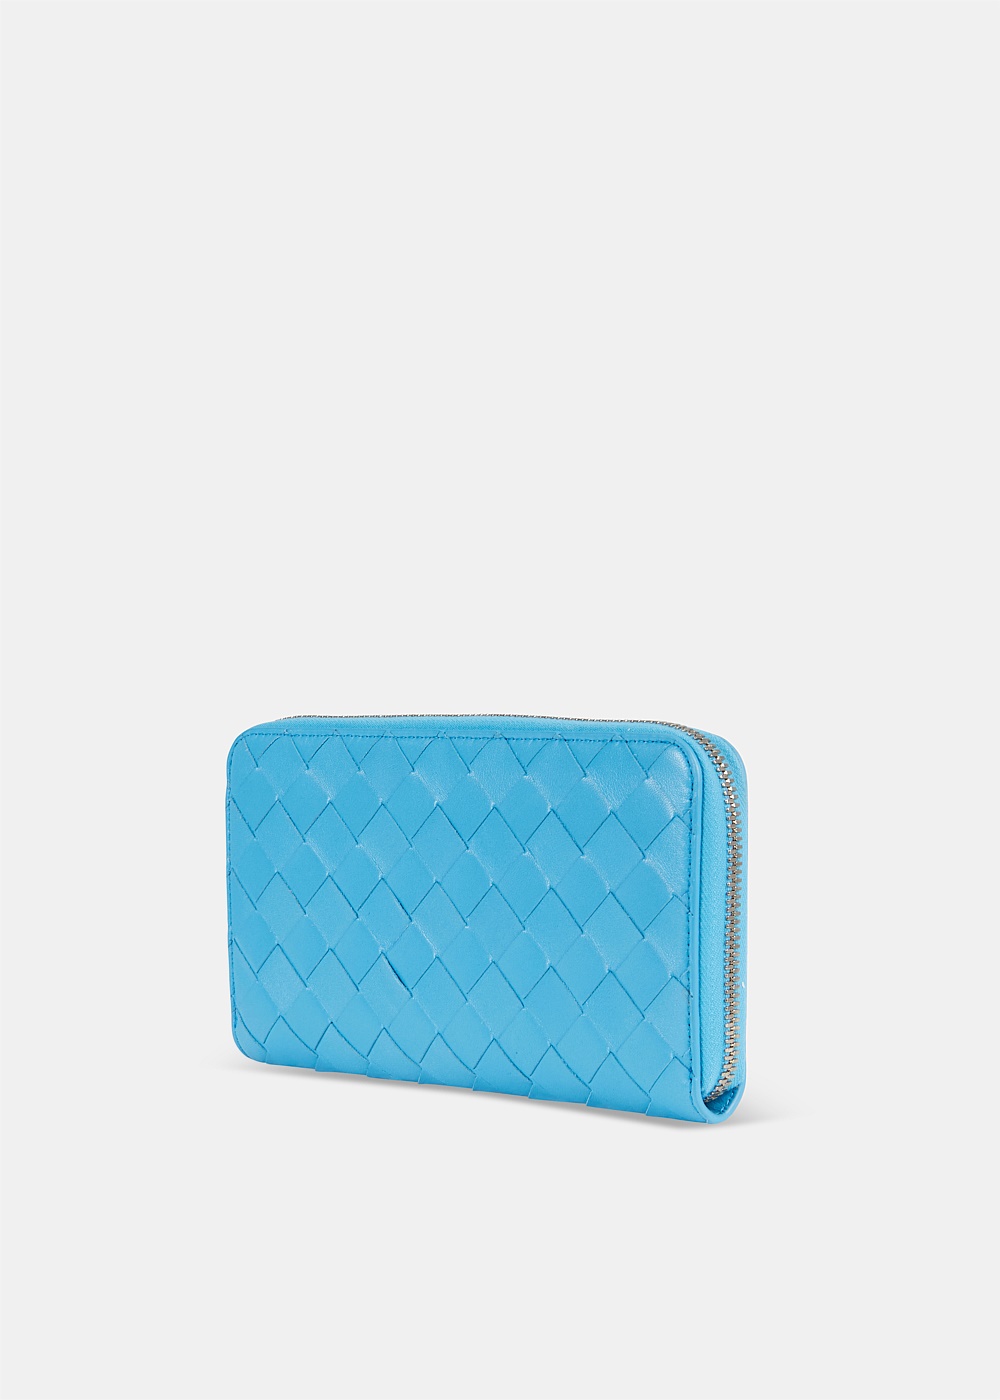 Bottega Veneta Bottega Veneta Wallet Intrecciato Nappa Leather Zip Around Wallet Pale Blue 